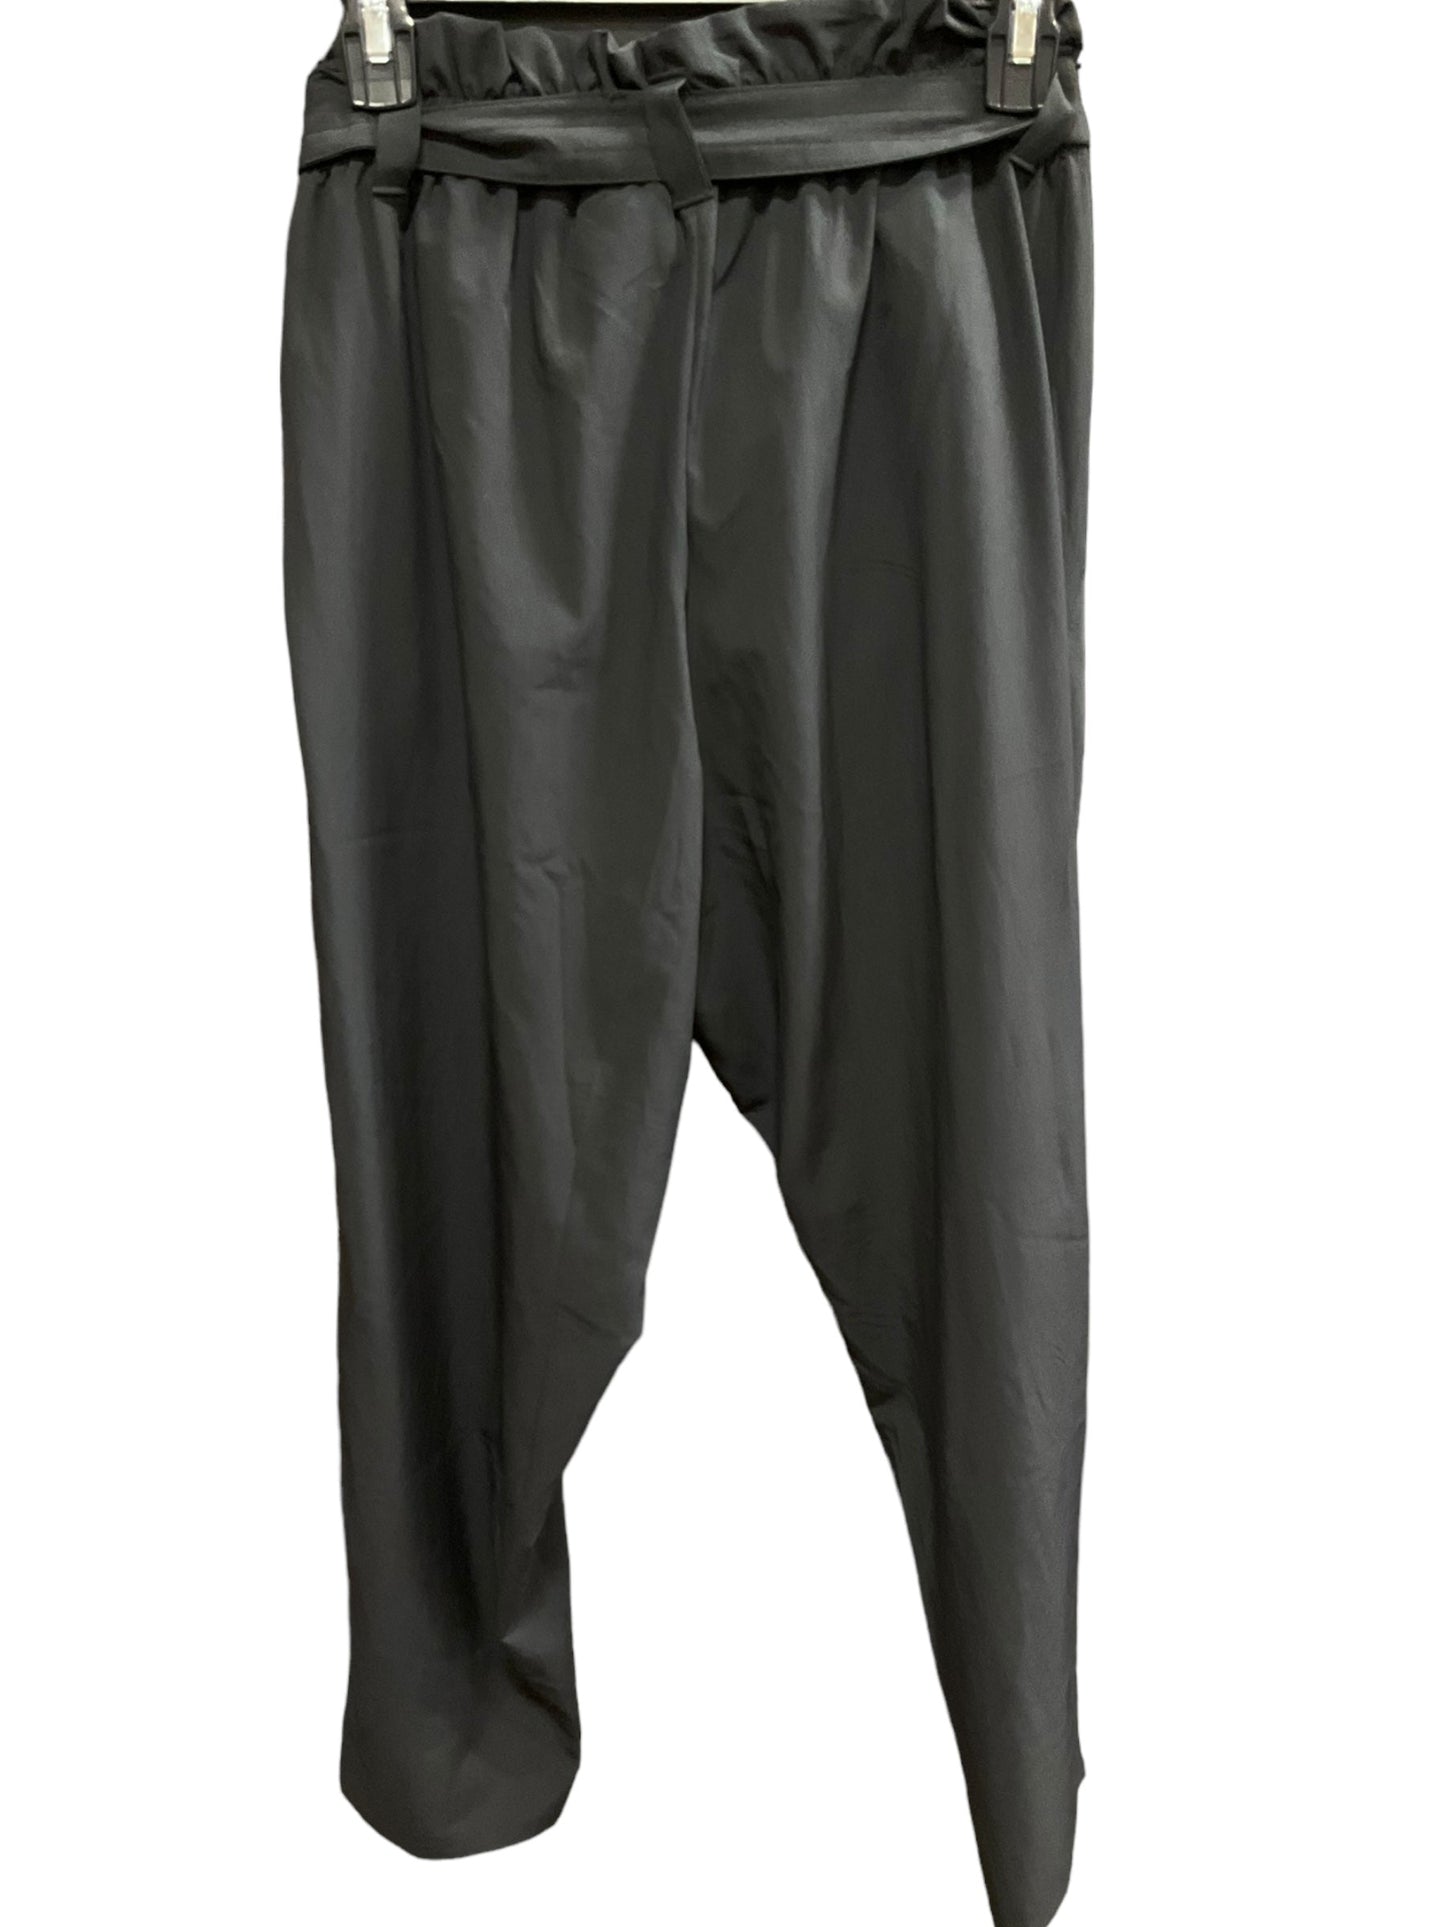 Black Athletic Pants 32 Degrees, Size M